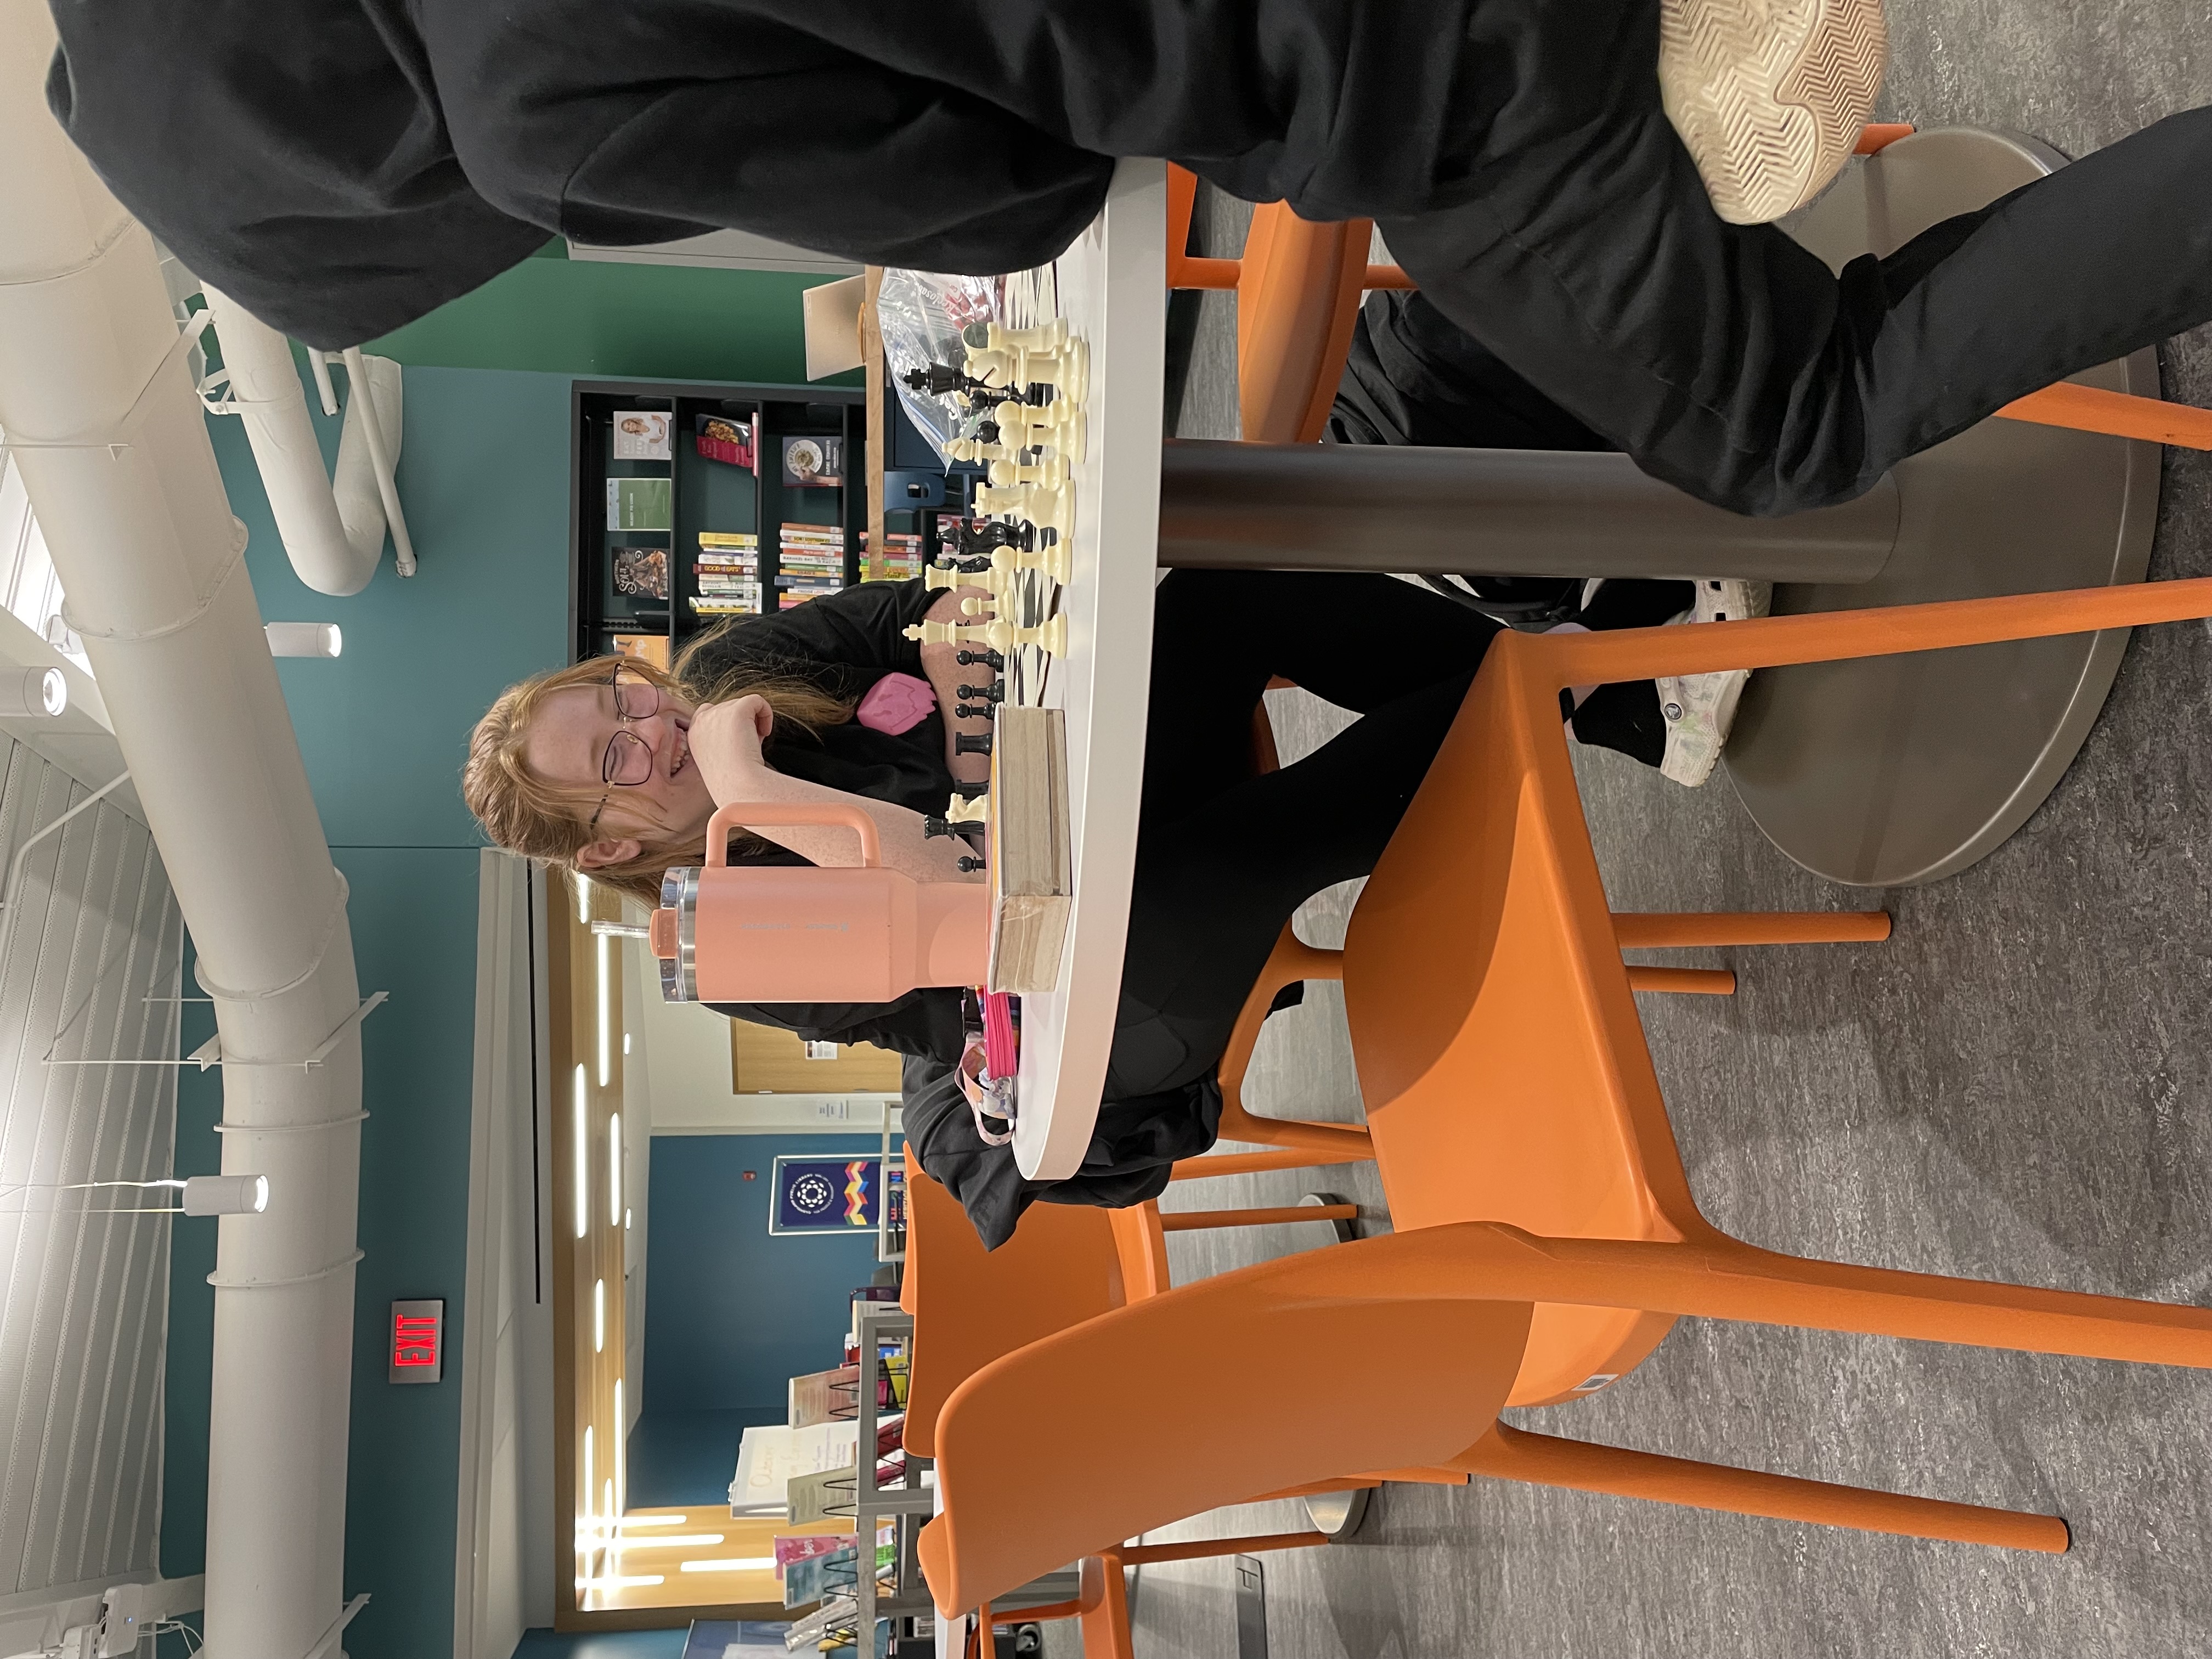 Julie Cutcher tutoring in action at CPL Glenville Branch